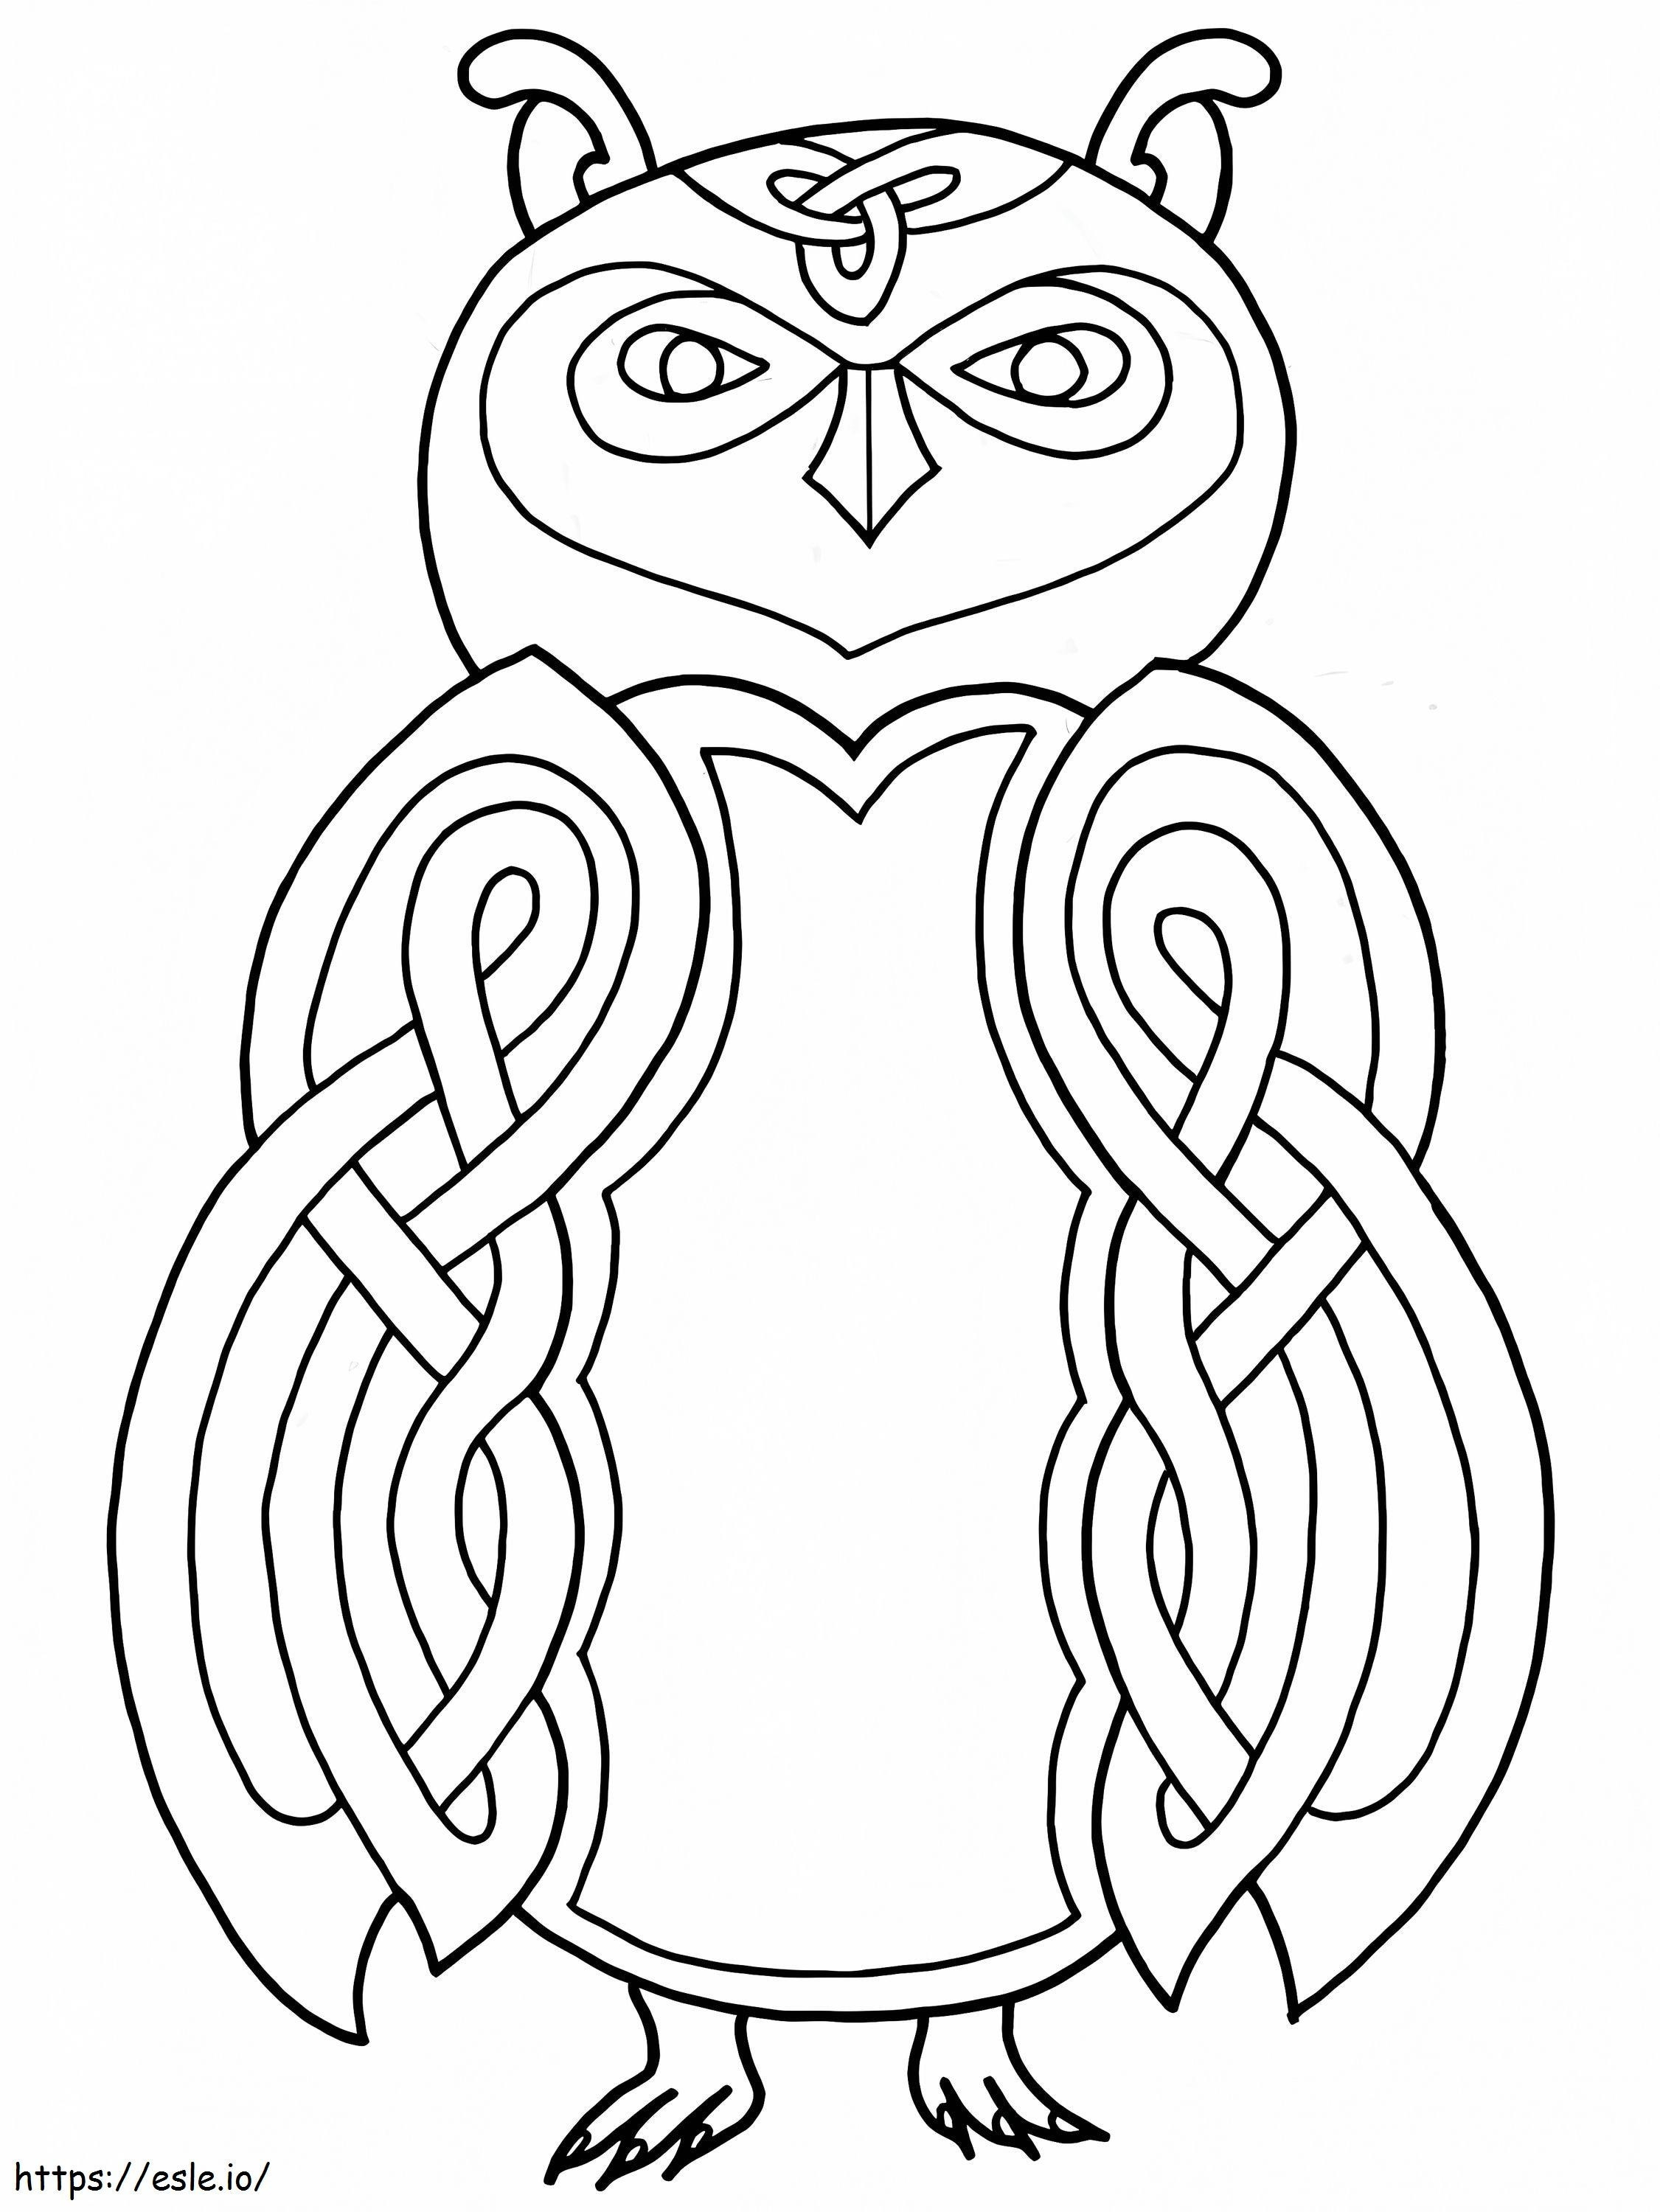 Celtic Owl Design coloring page